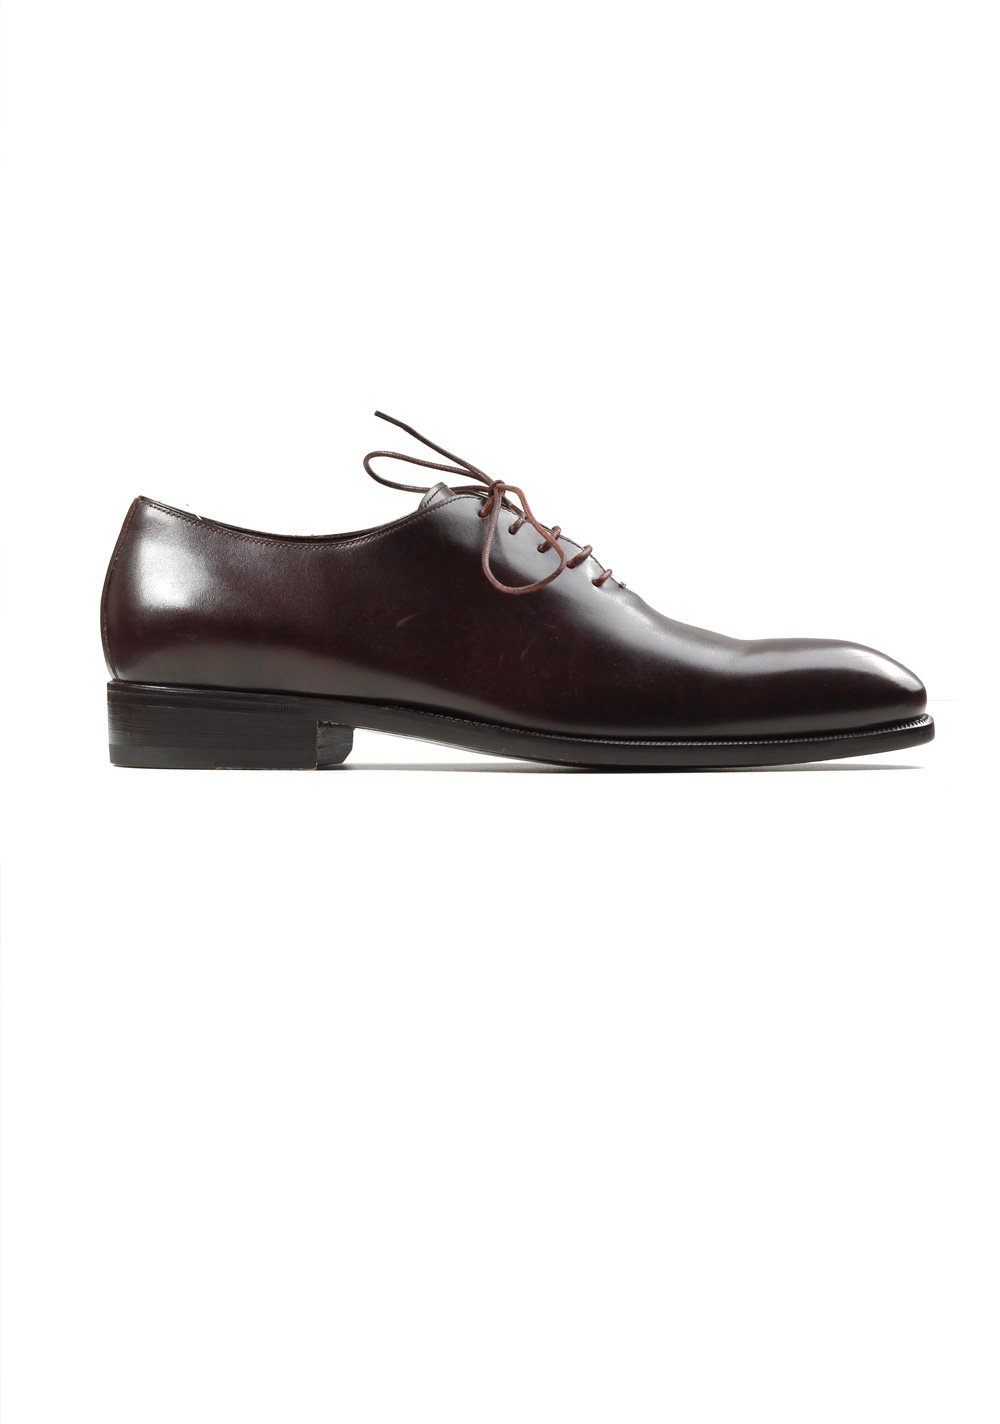 TOM FORD Gianni Whole-cut Oxford Shoes Size 8T Uk / 9T U.S. | Costume Limité